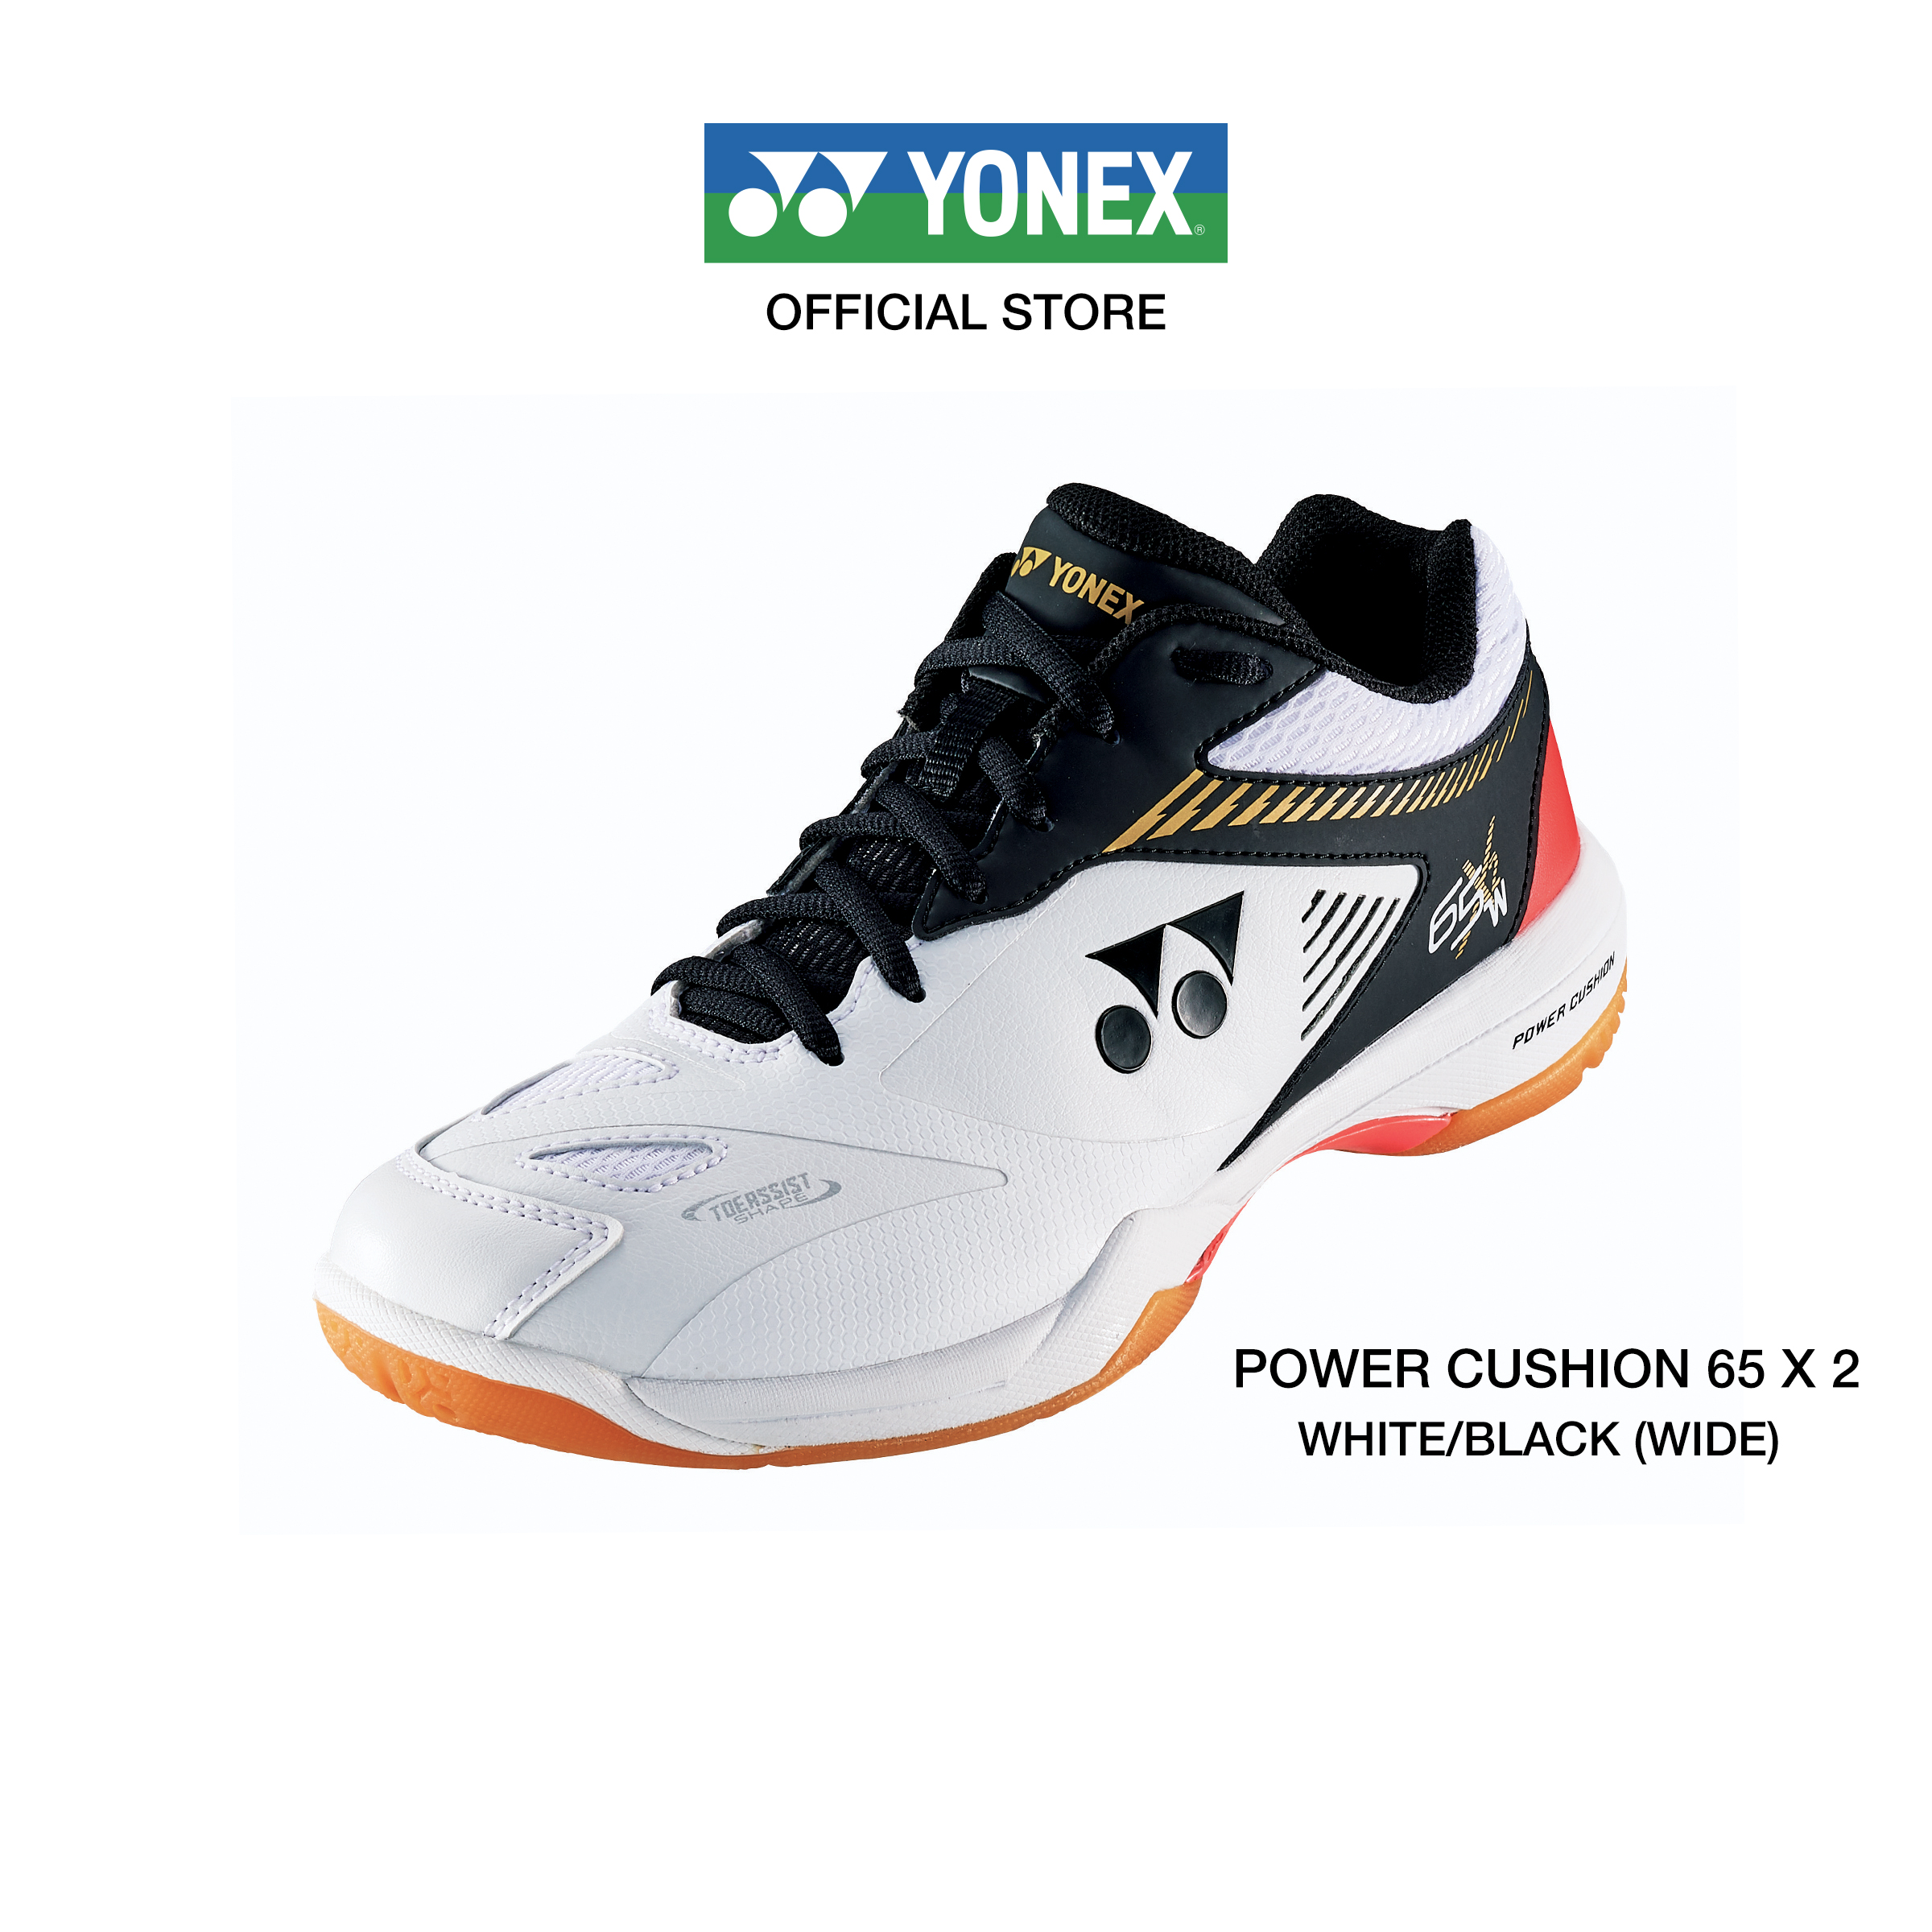 (SIZE US MEN) รองเท้าแบดมินตัน YONEX รุ่น POWER CUSHION 65 X 2 WIDE  (SHB65X2) รองเท้าให้ความกระชับเท้าและความมั่นคงเพื่อตอบสนองการเคลื่อนไหวที่รวดเร็ว